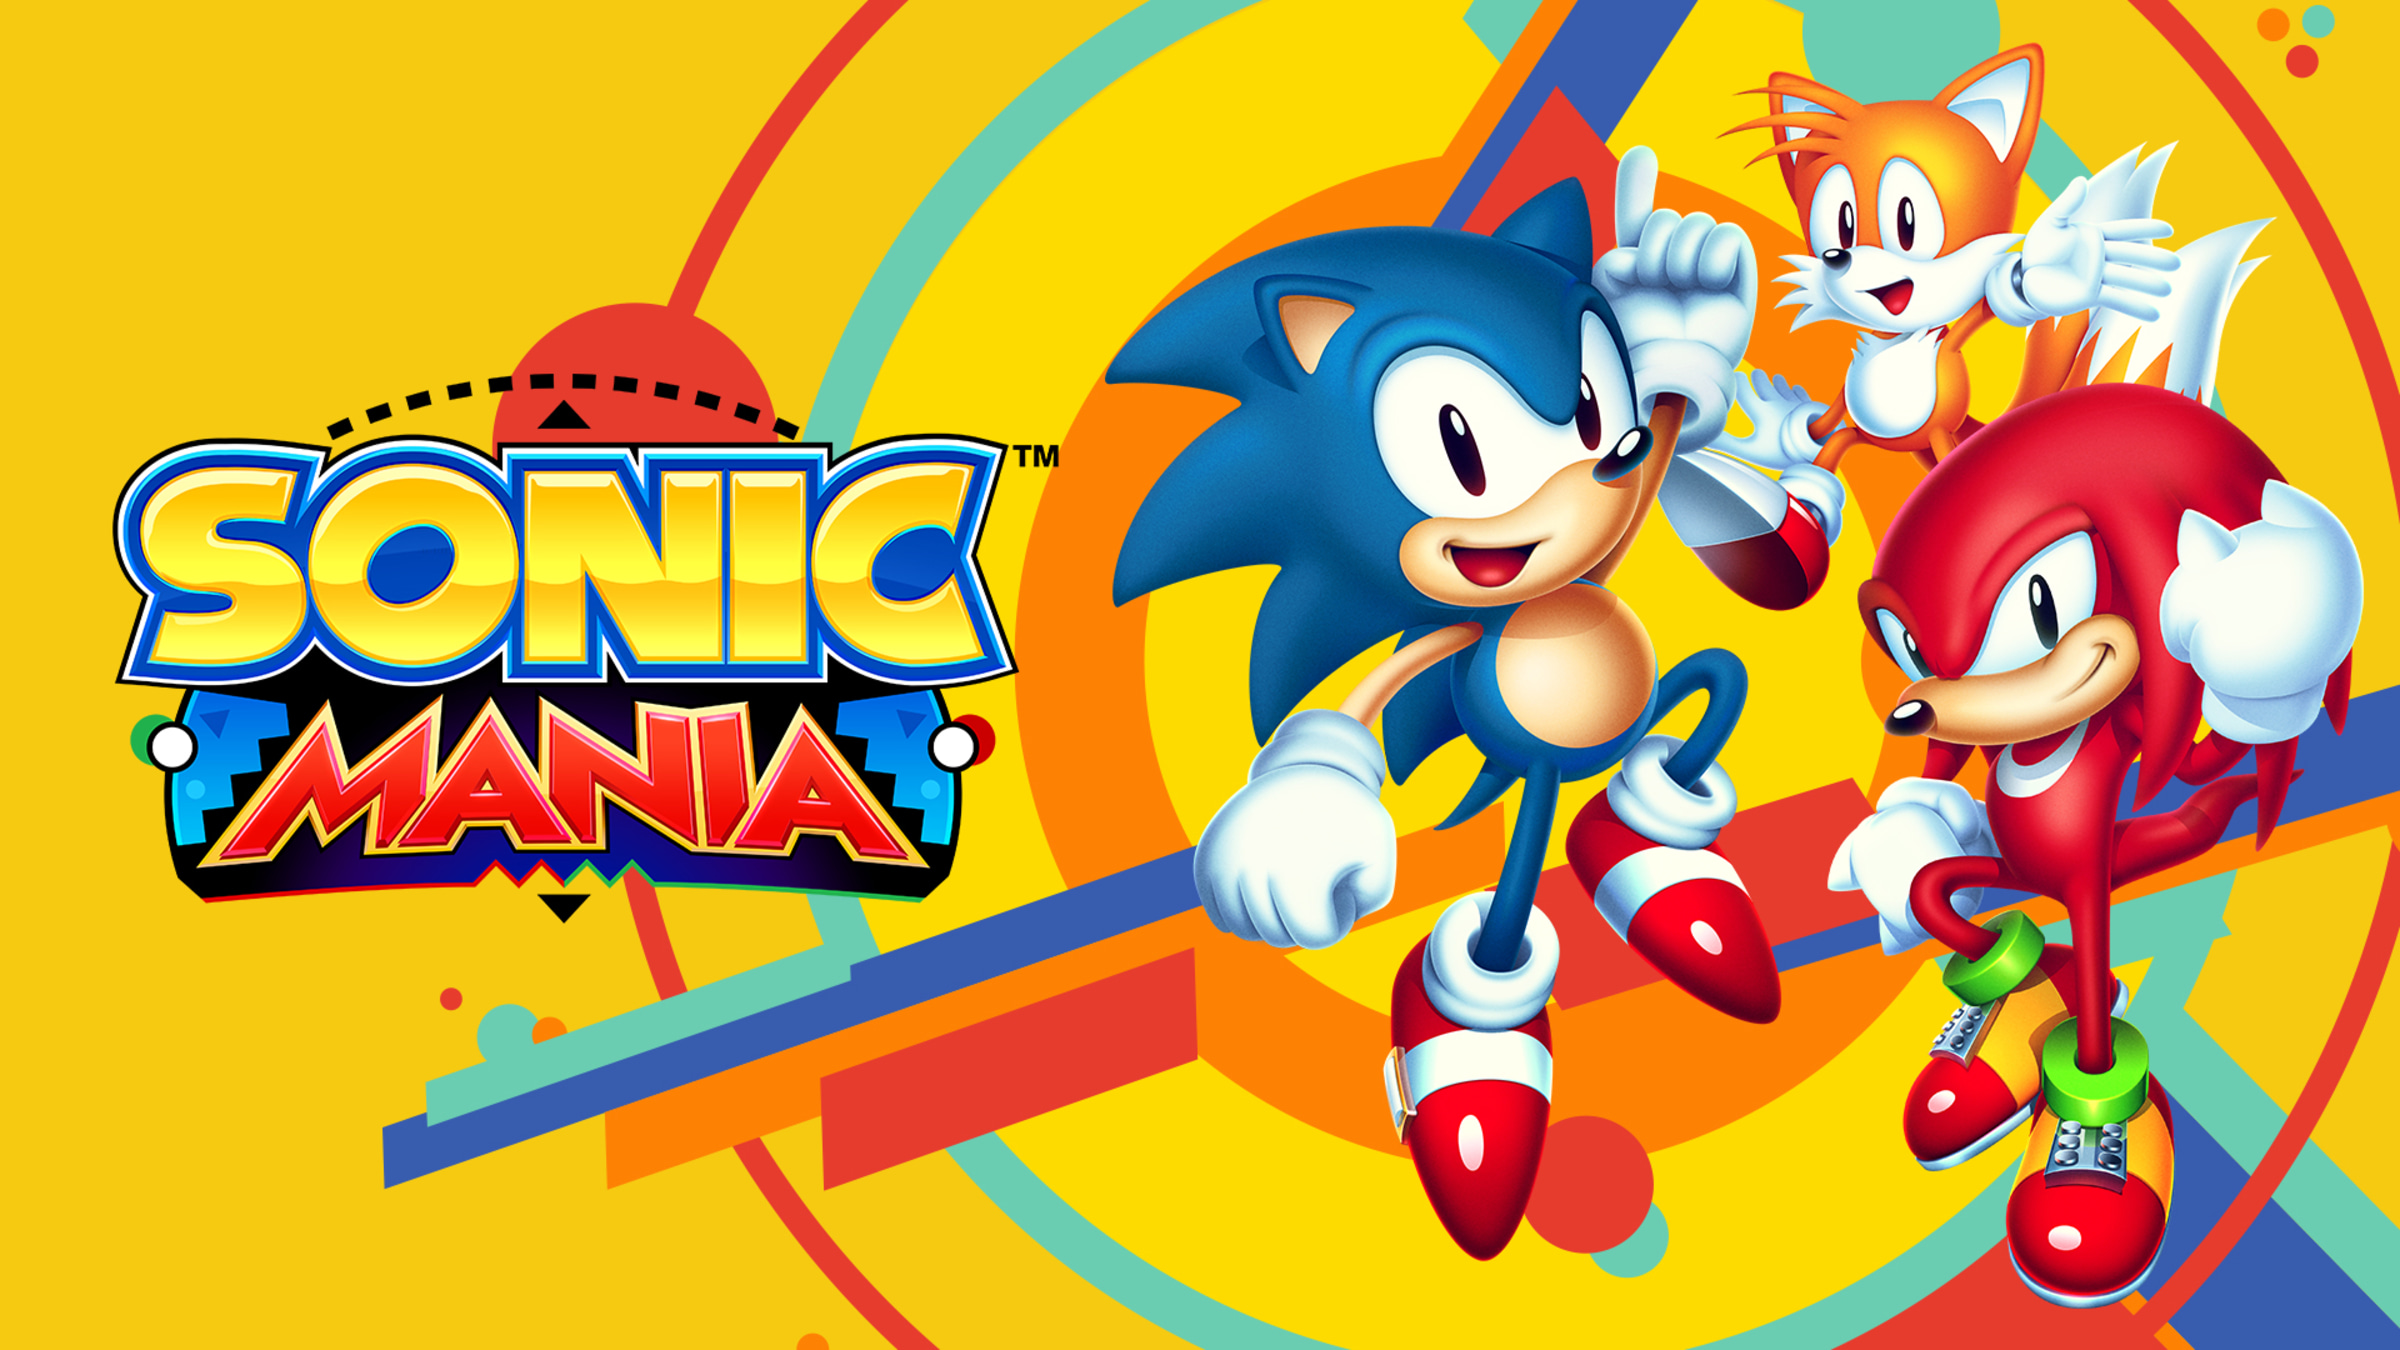 Sonic Mania Plus and Sonic Mania Adventures details